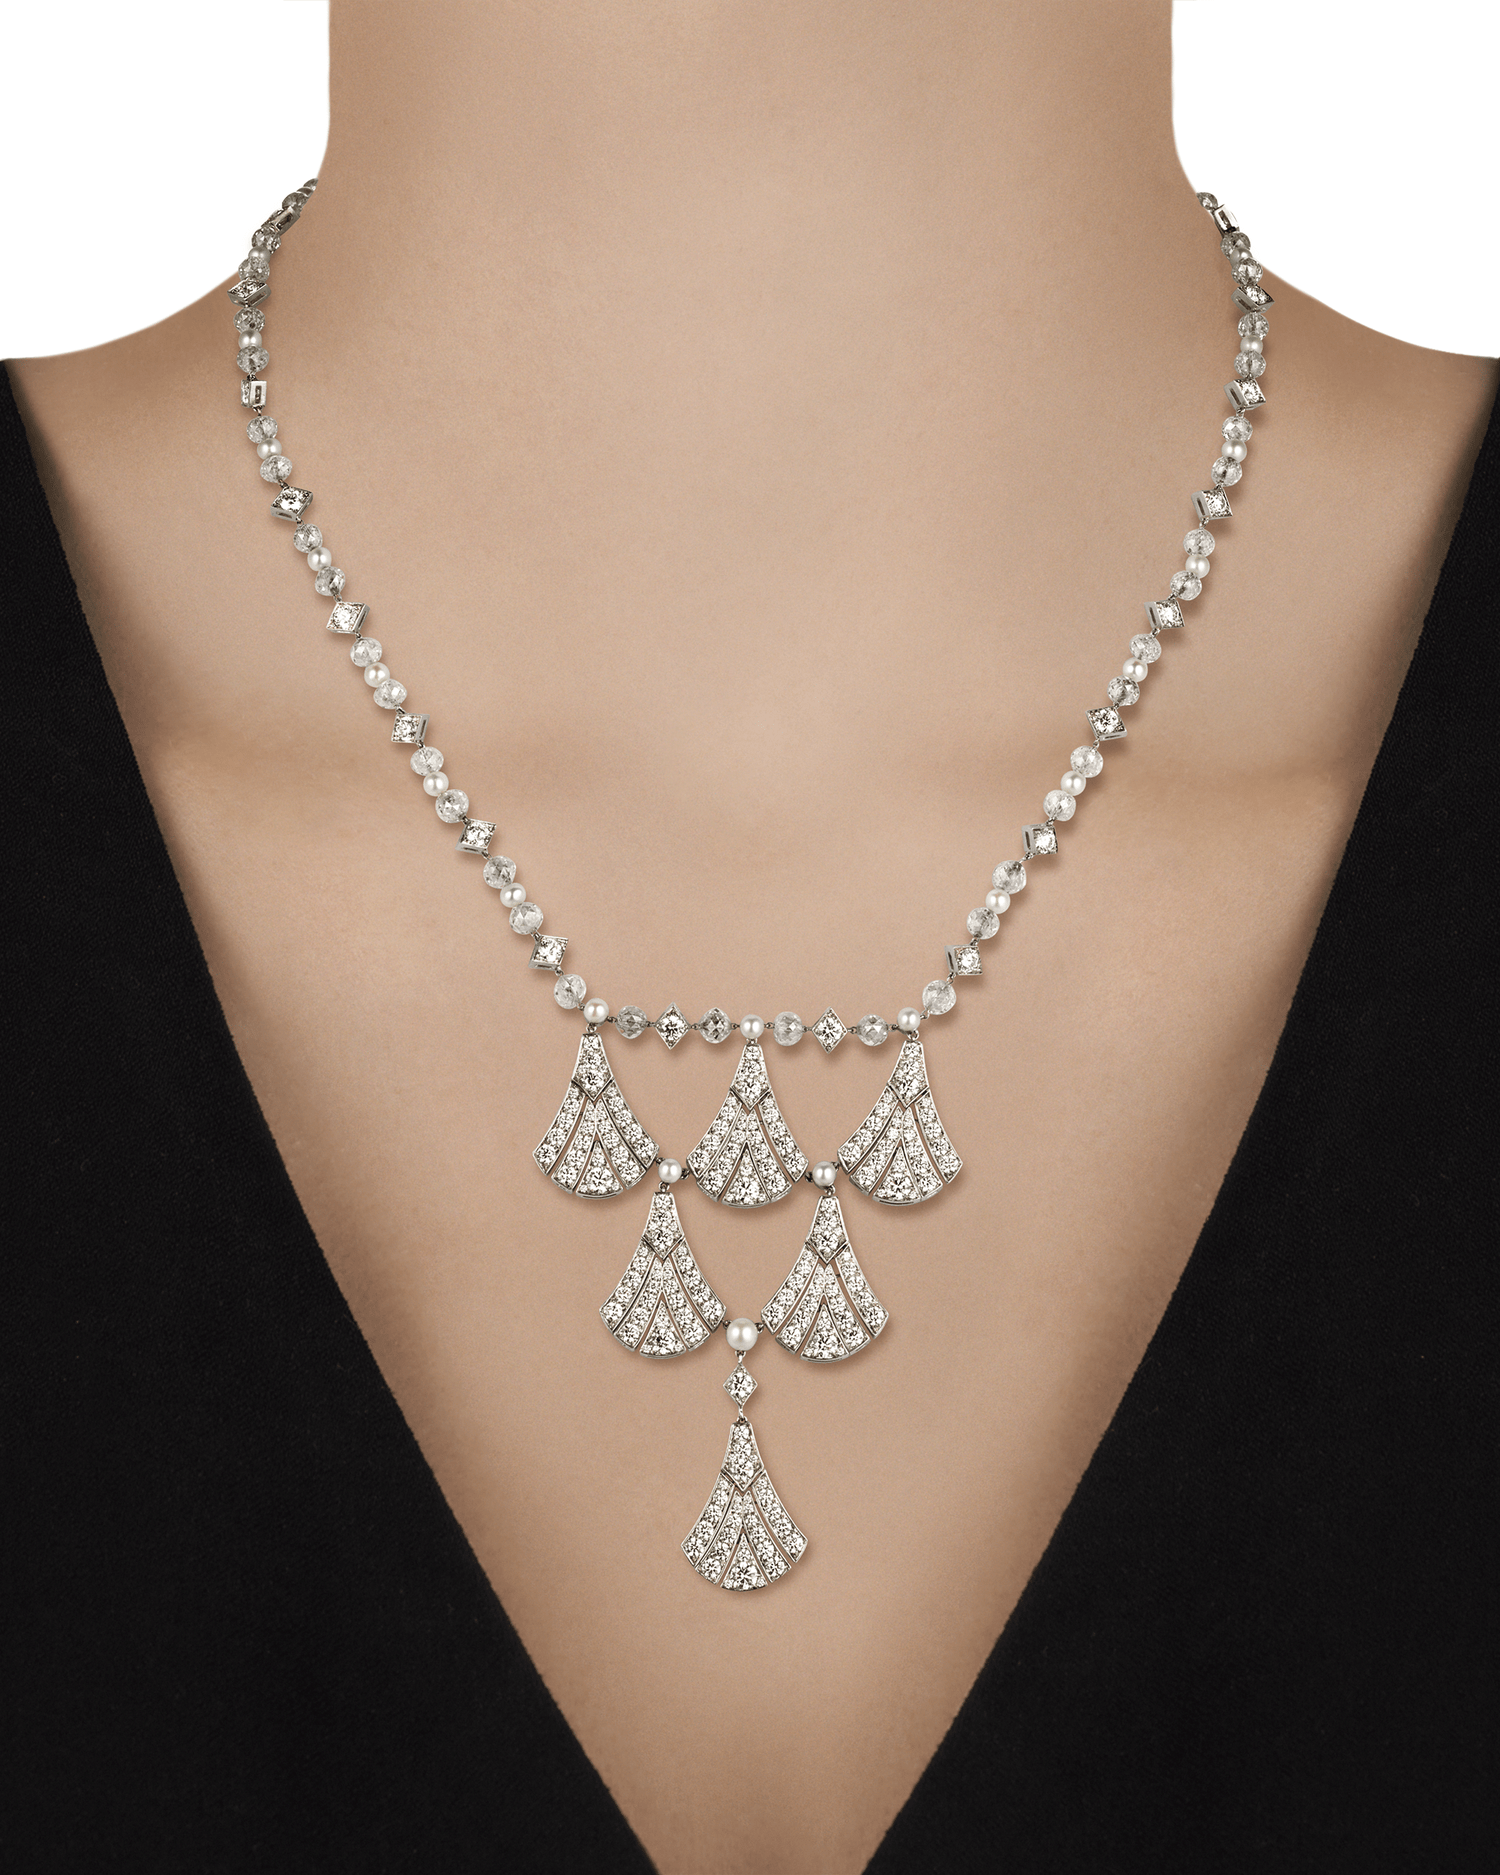 Tiffany & Co. Diamond Lavalier Necklace, 45.64 Carats